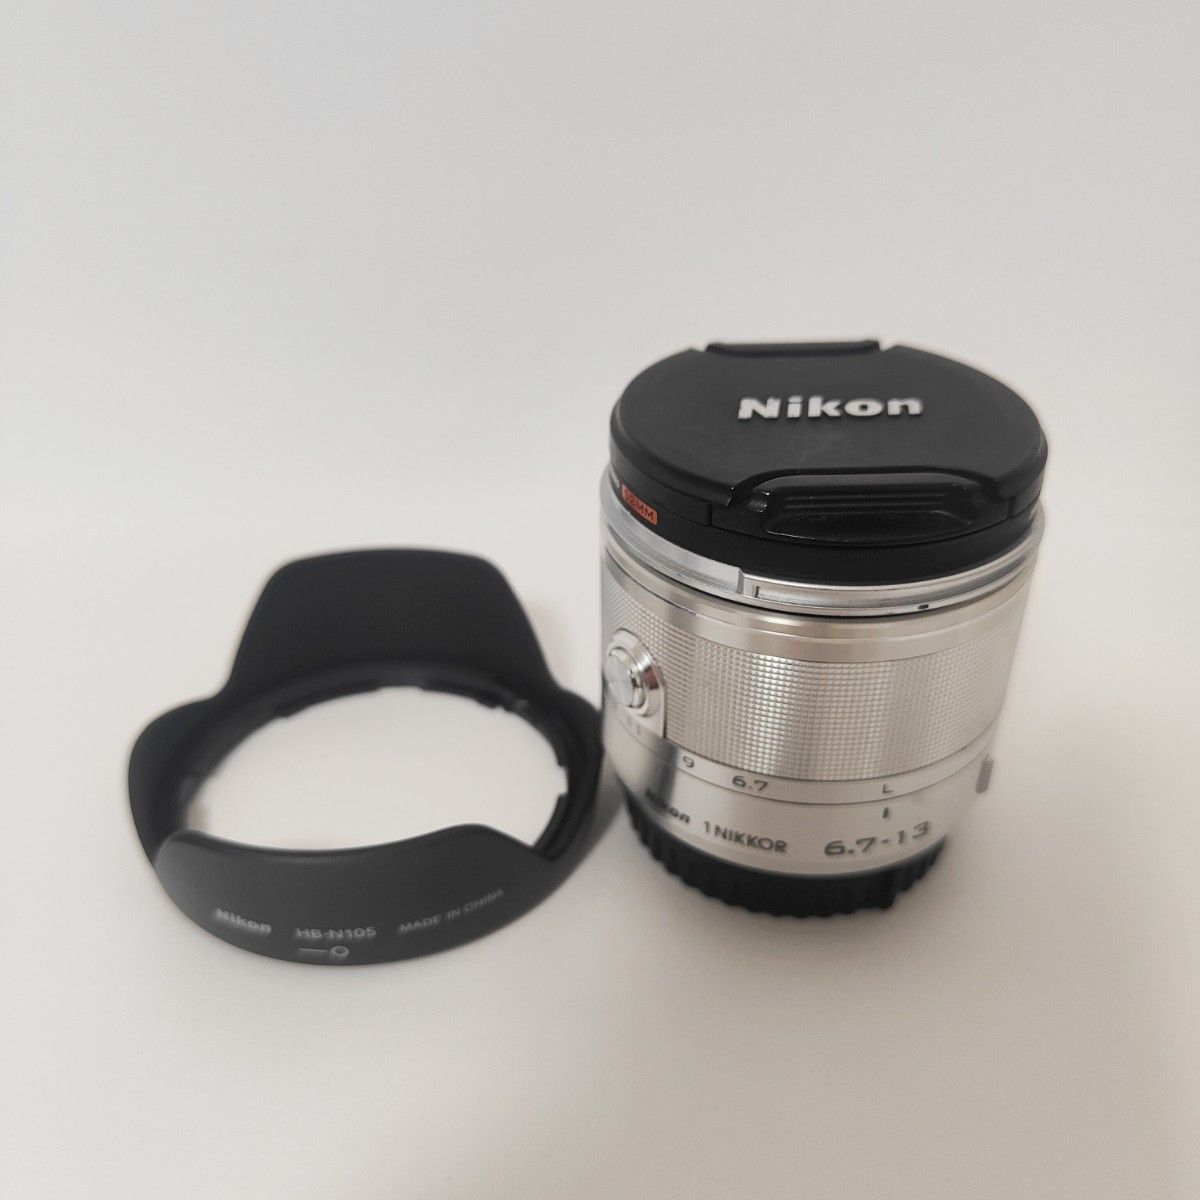 Nikon 1NIKKOR VR6.7-13mm f 3.5-5.6 ブラック - レンズ(ズーム)